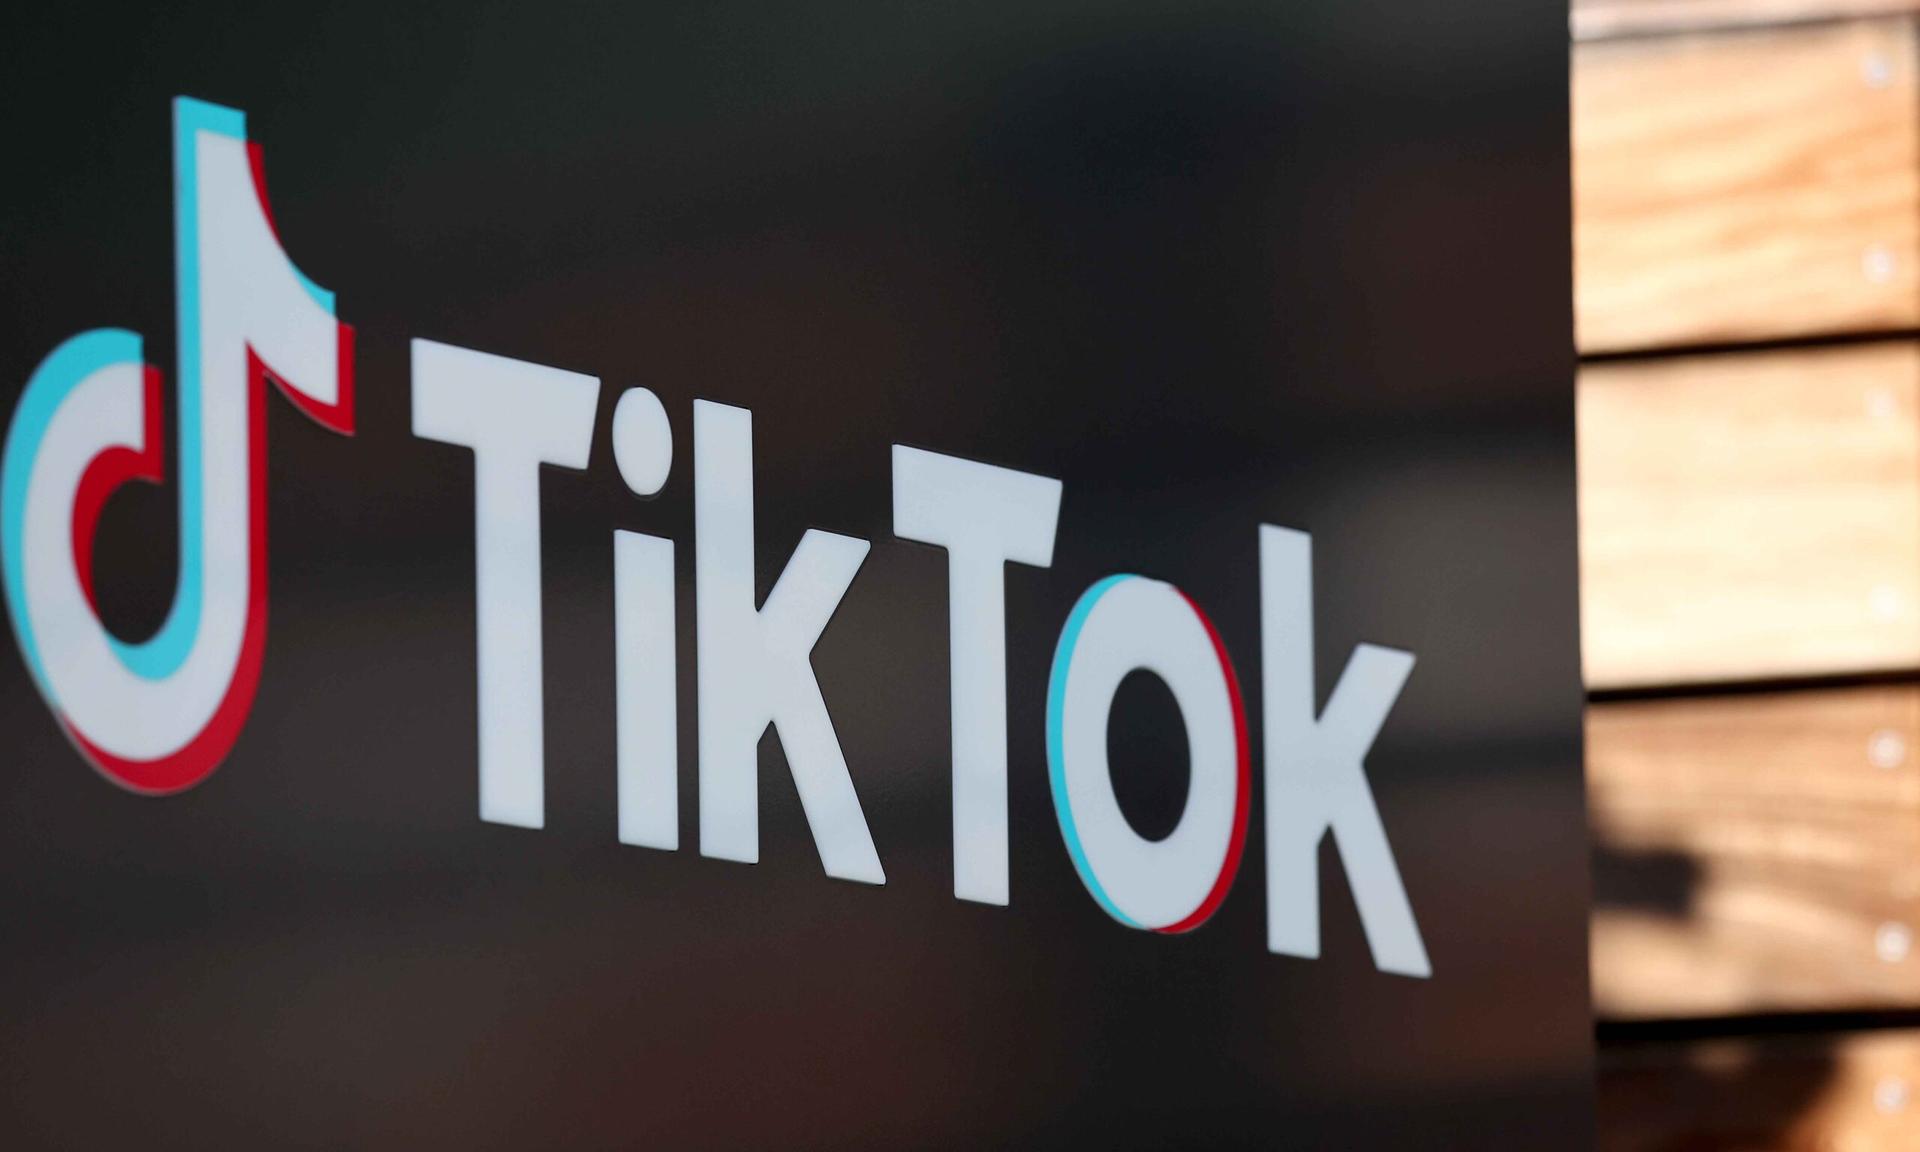 TikTok logo displayed on sign